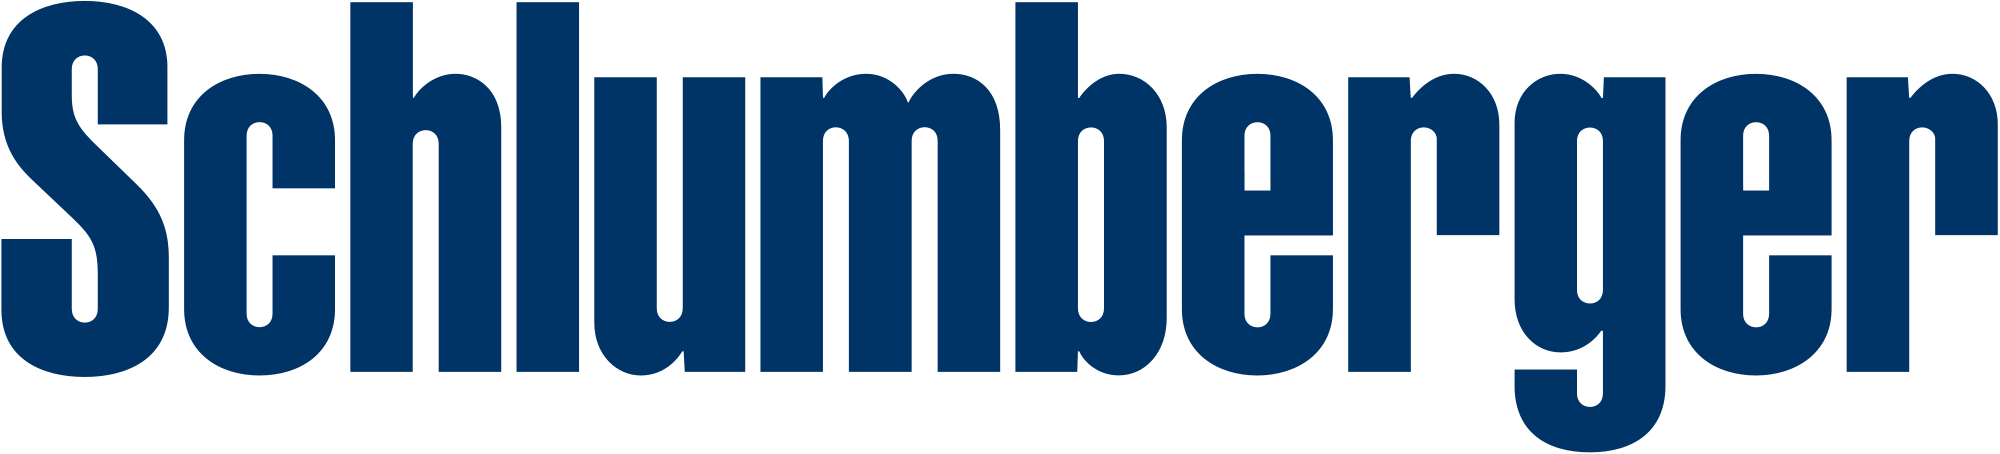 Schlumberger Brand Logo